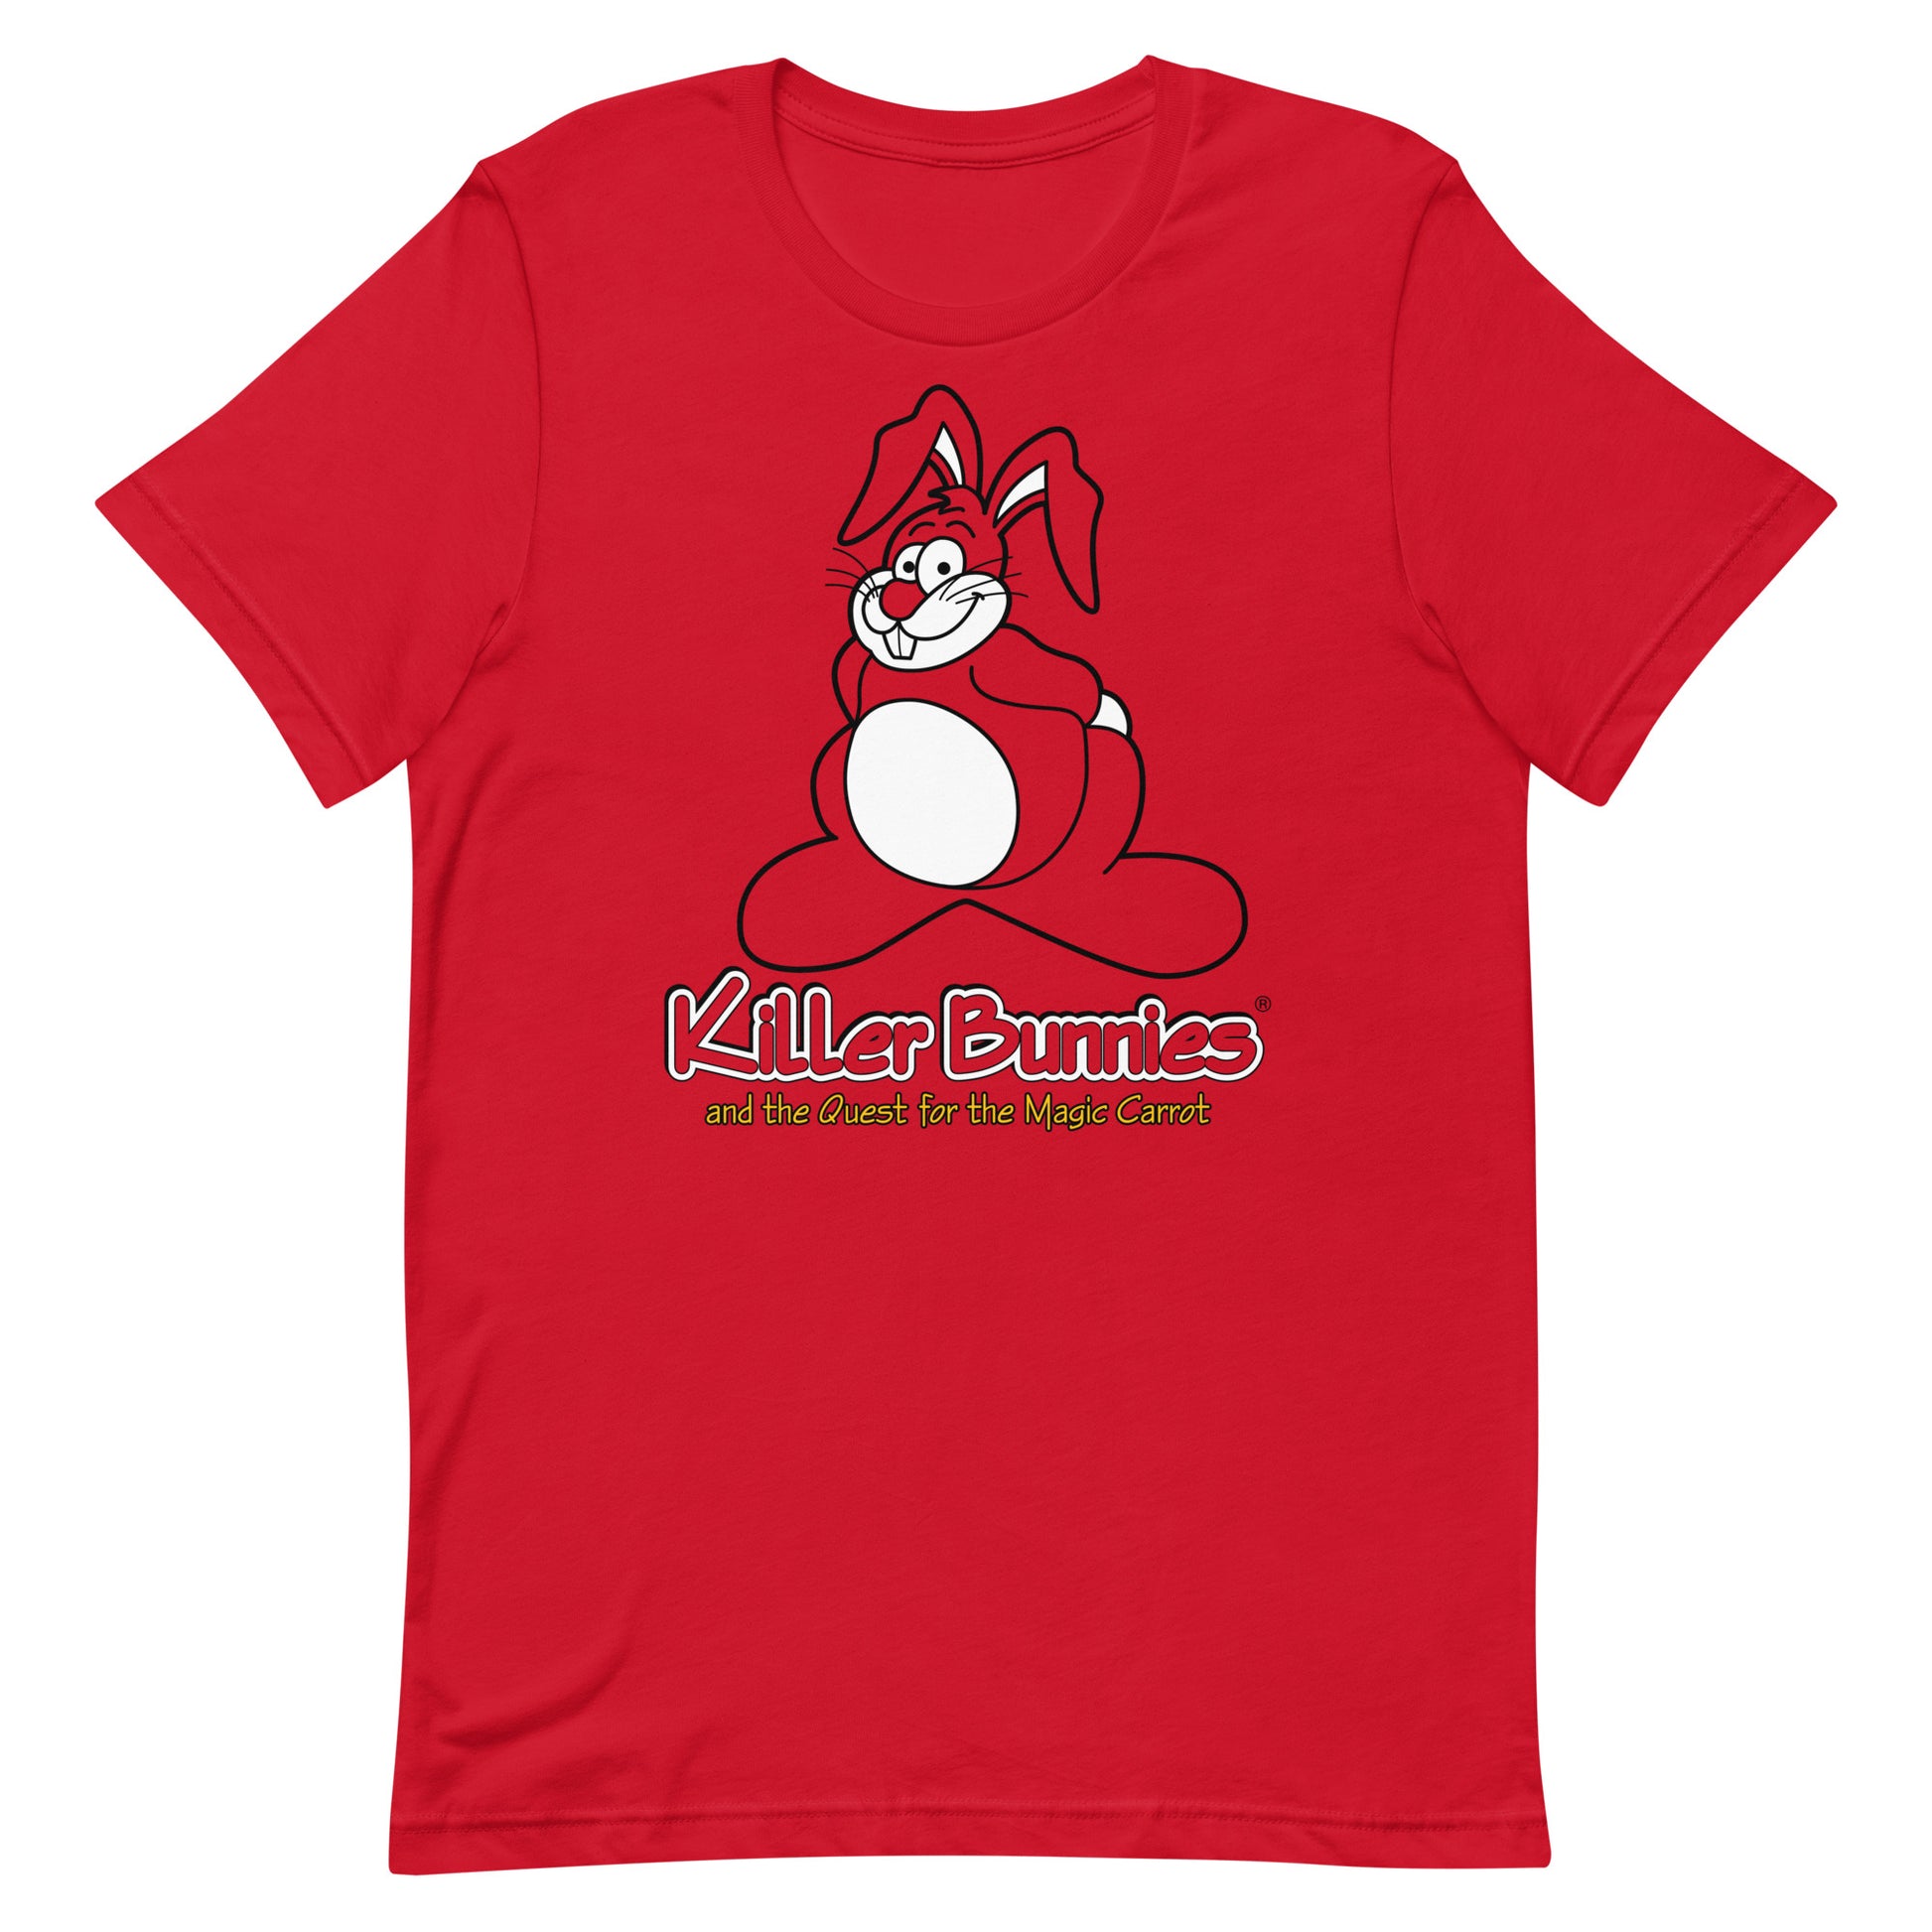 Congenial Bunny Unisex T-Shirt - Red